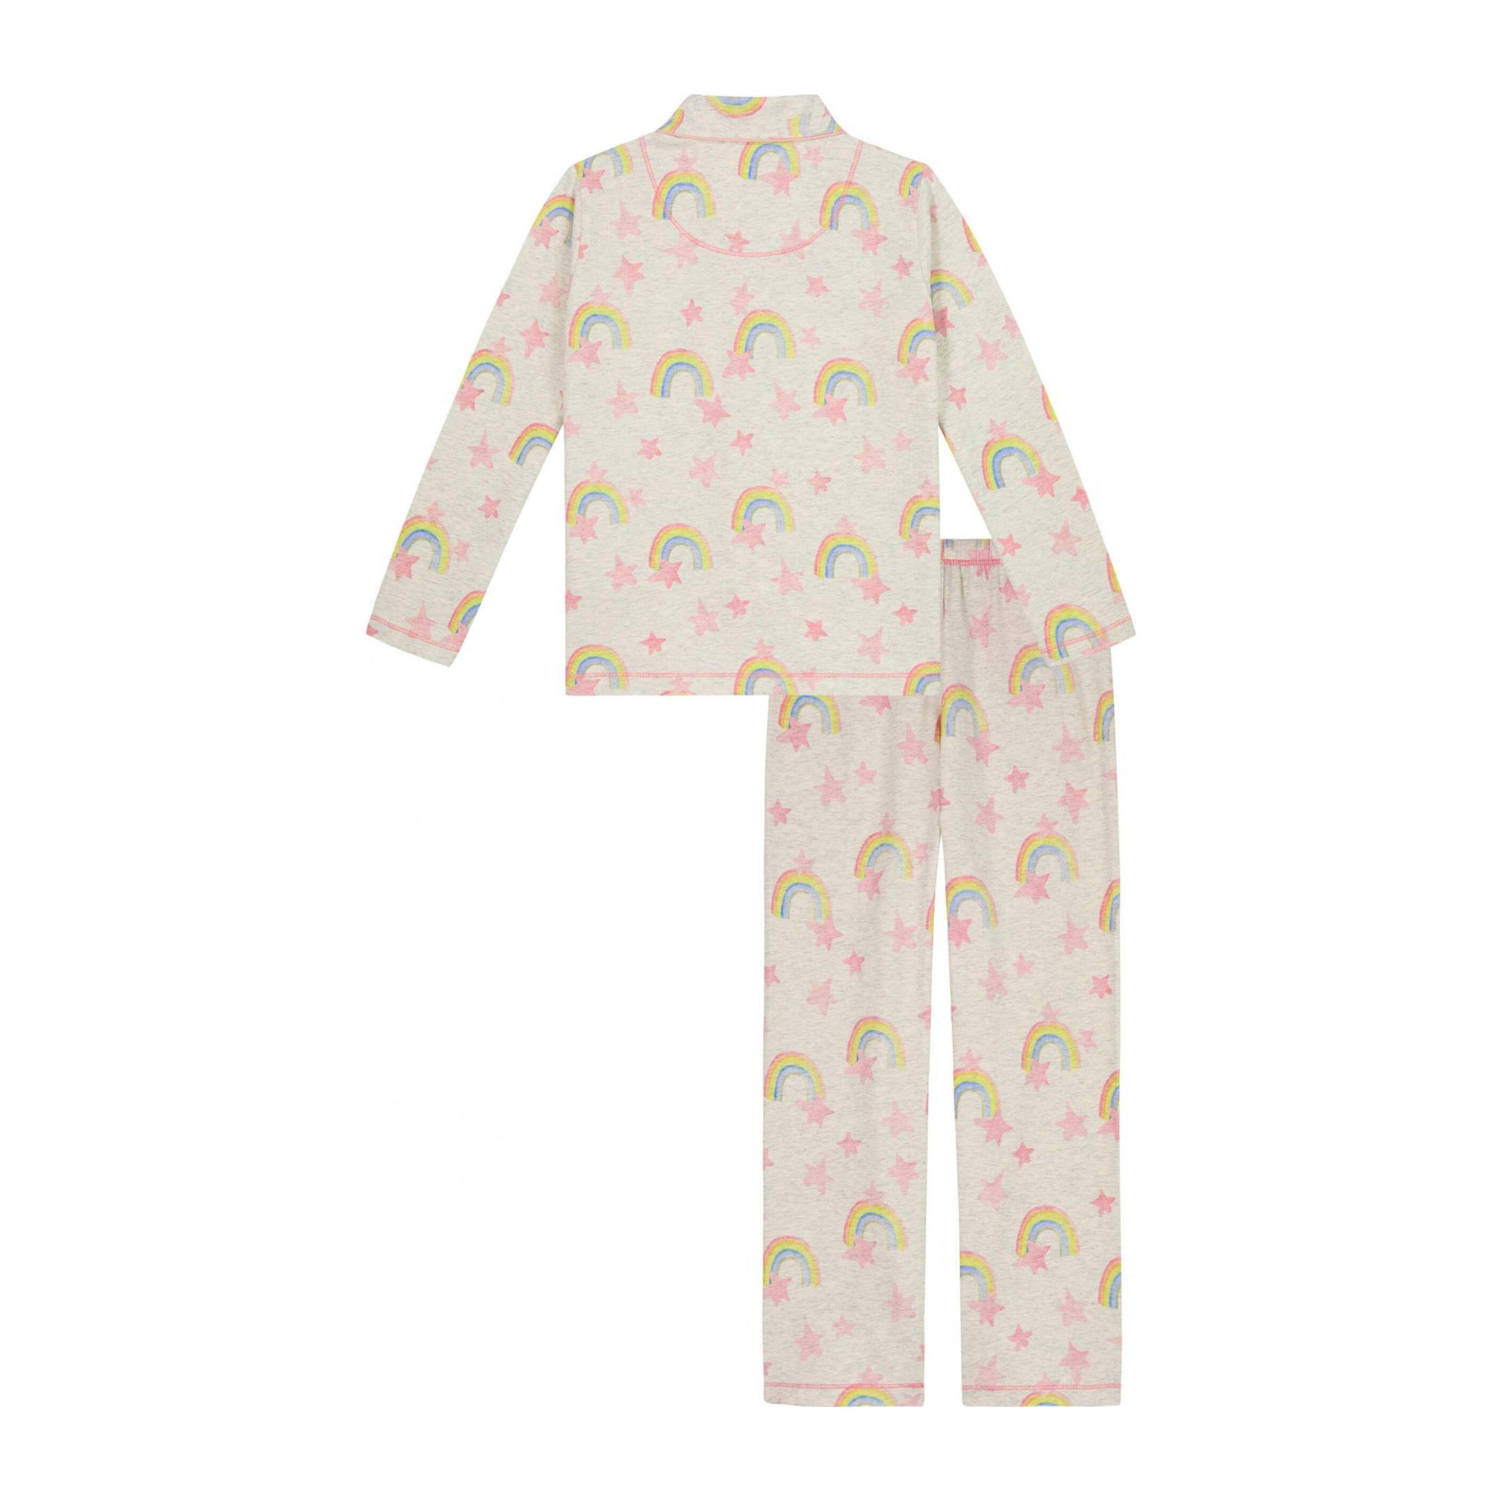 Claesen's pyjama Stars roze lichtgrijs